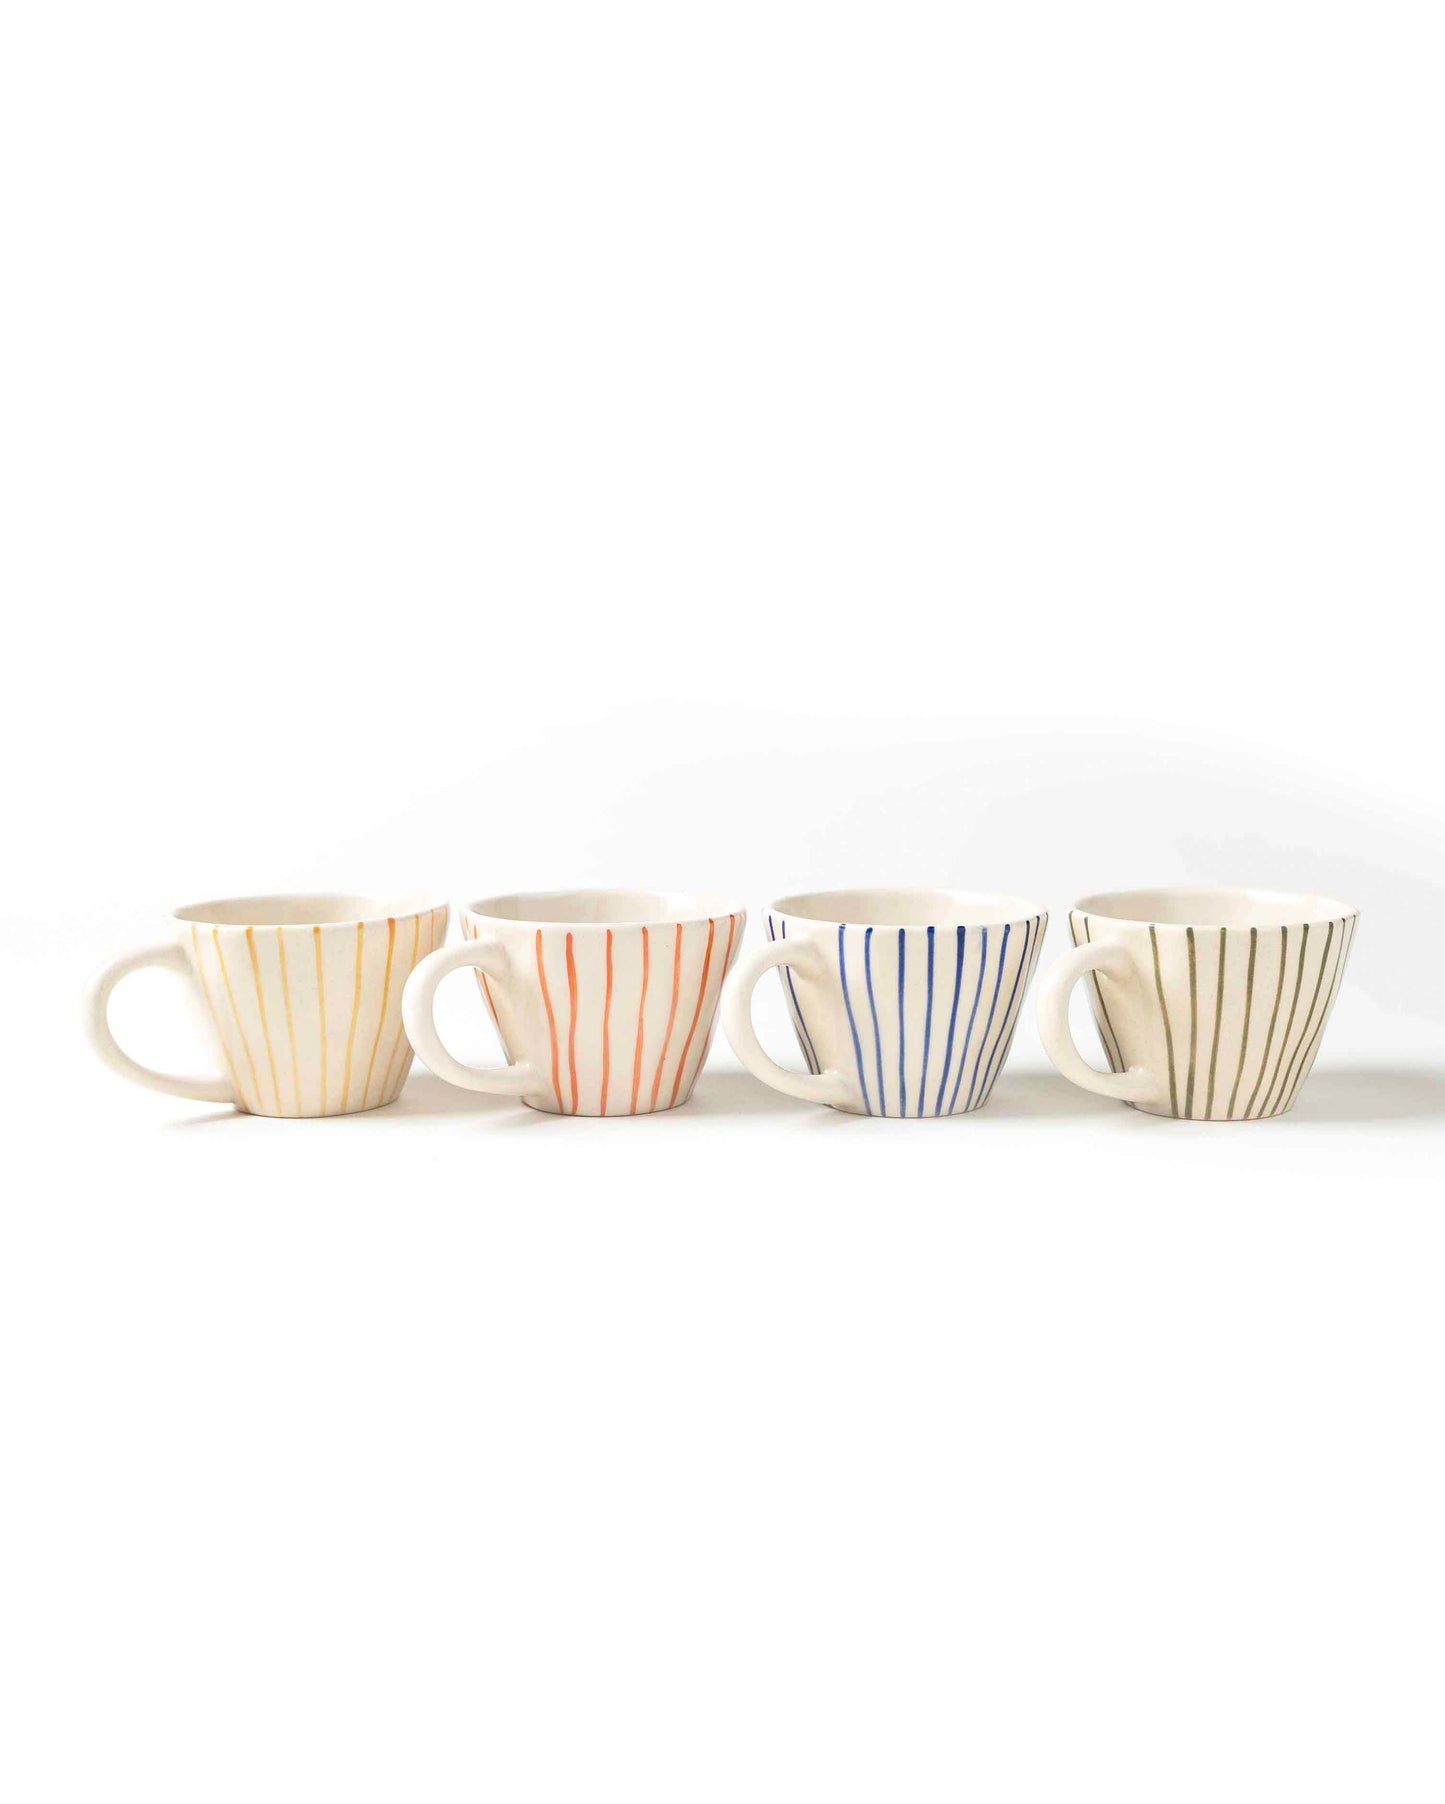 Organic Tea Cups With Hand Painted Stripes - 1 Pc - MAKAIBARI TEA